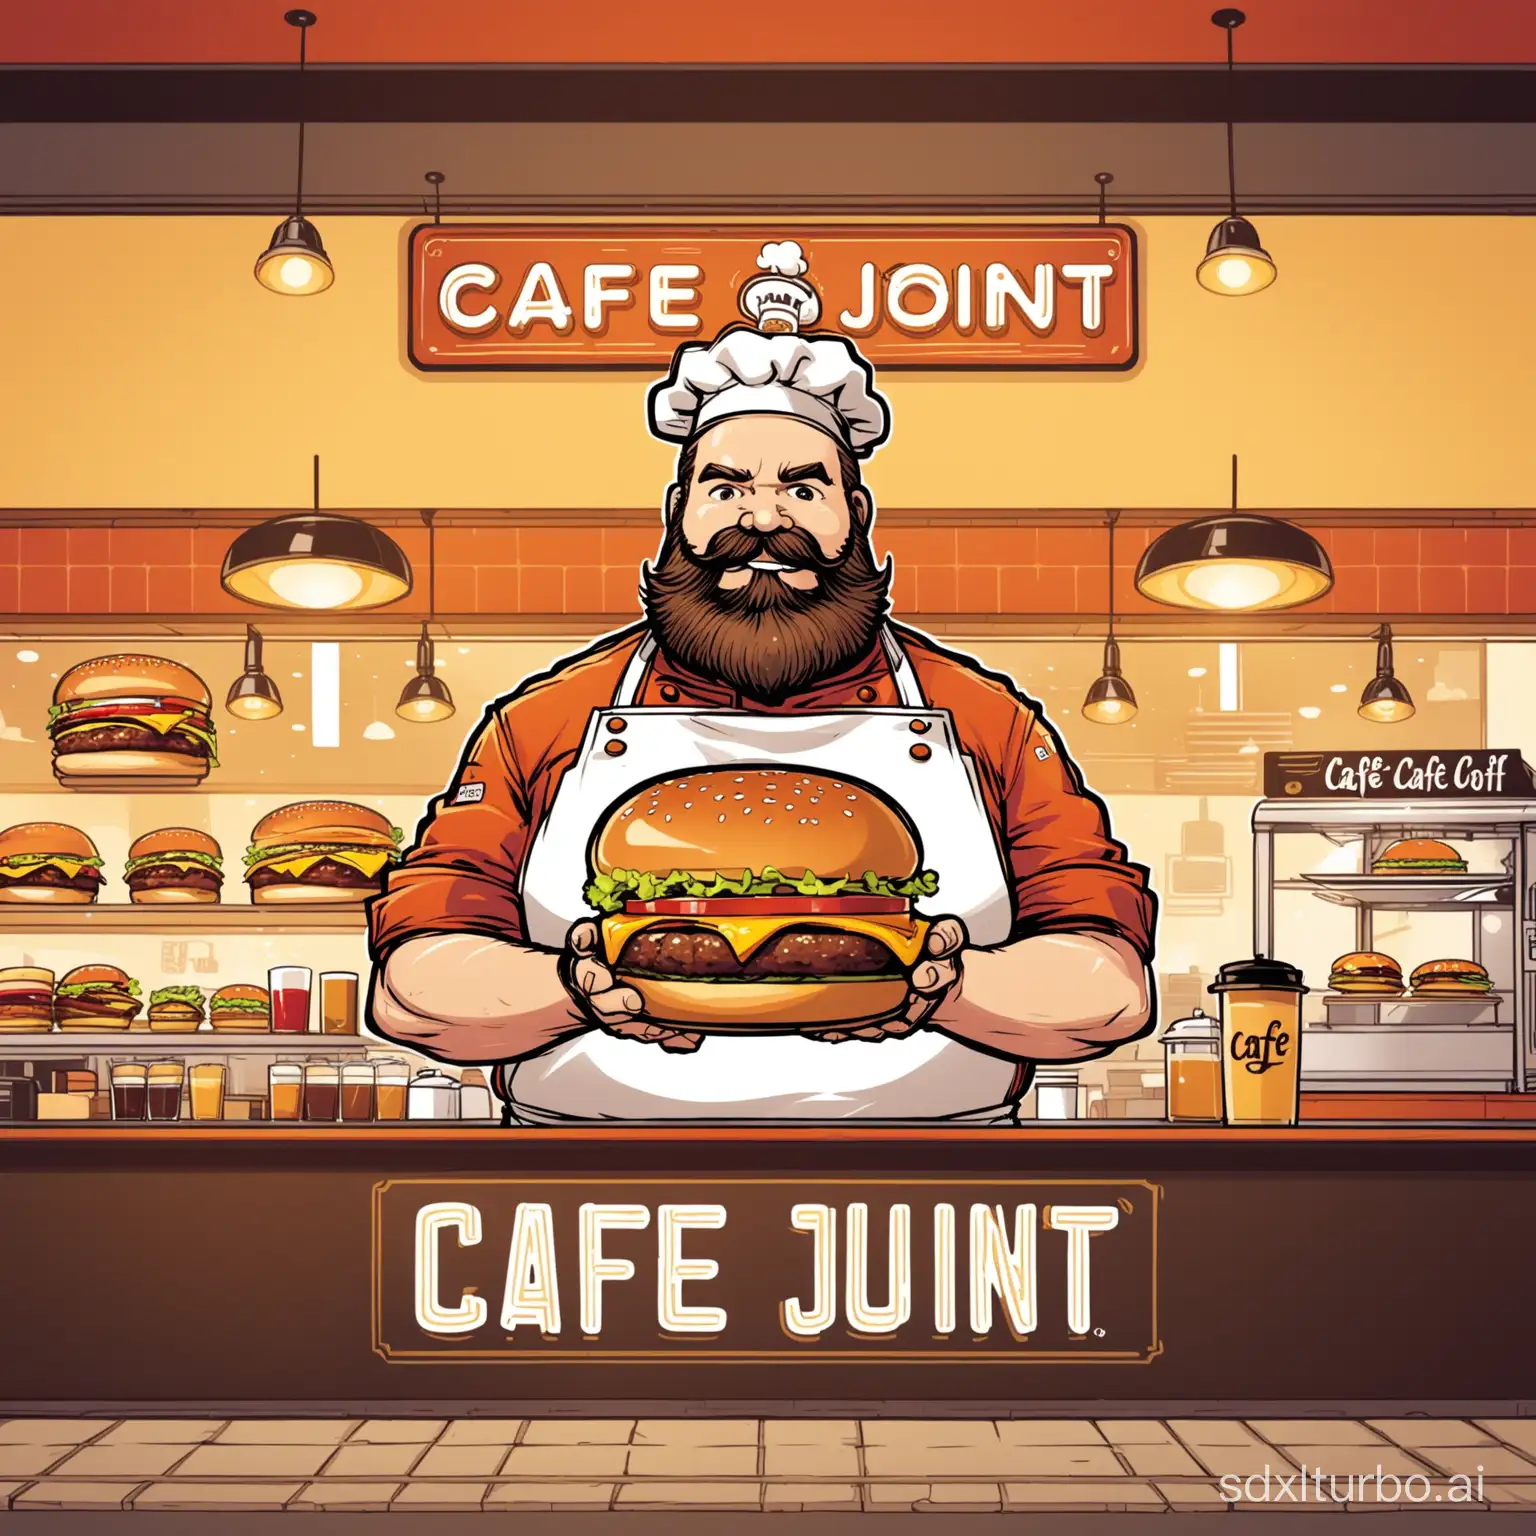 Logo, cafe, burger joint, burgers, burly bearded chef, comics, bright